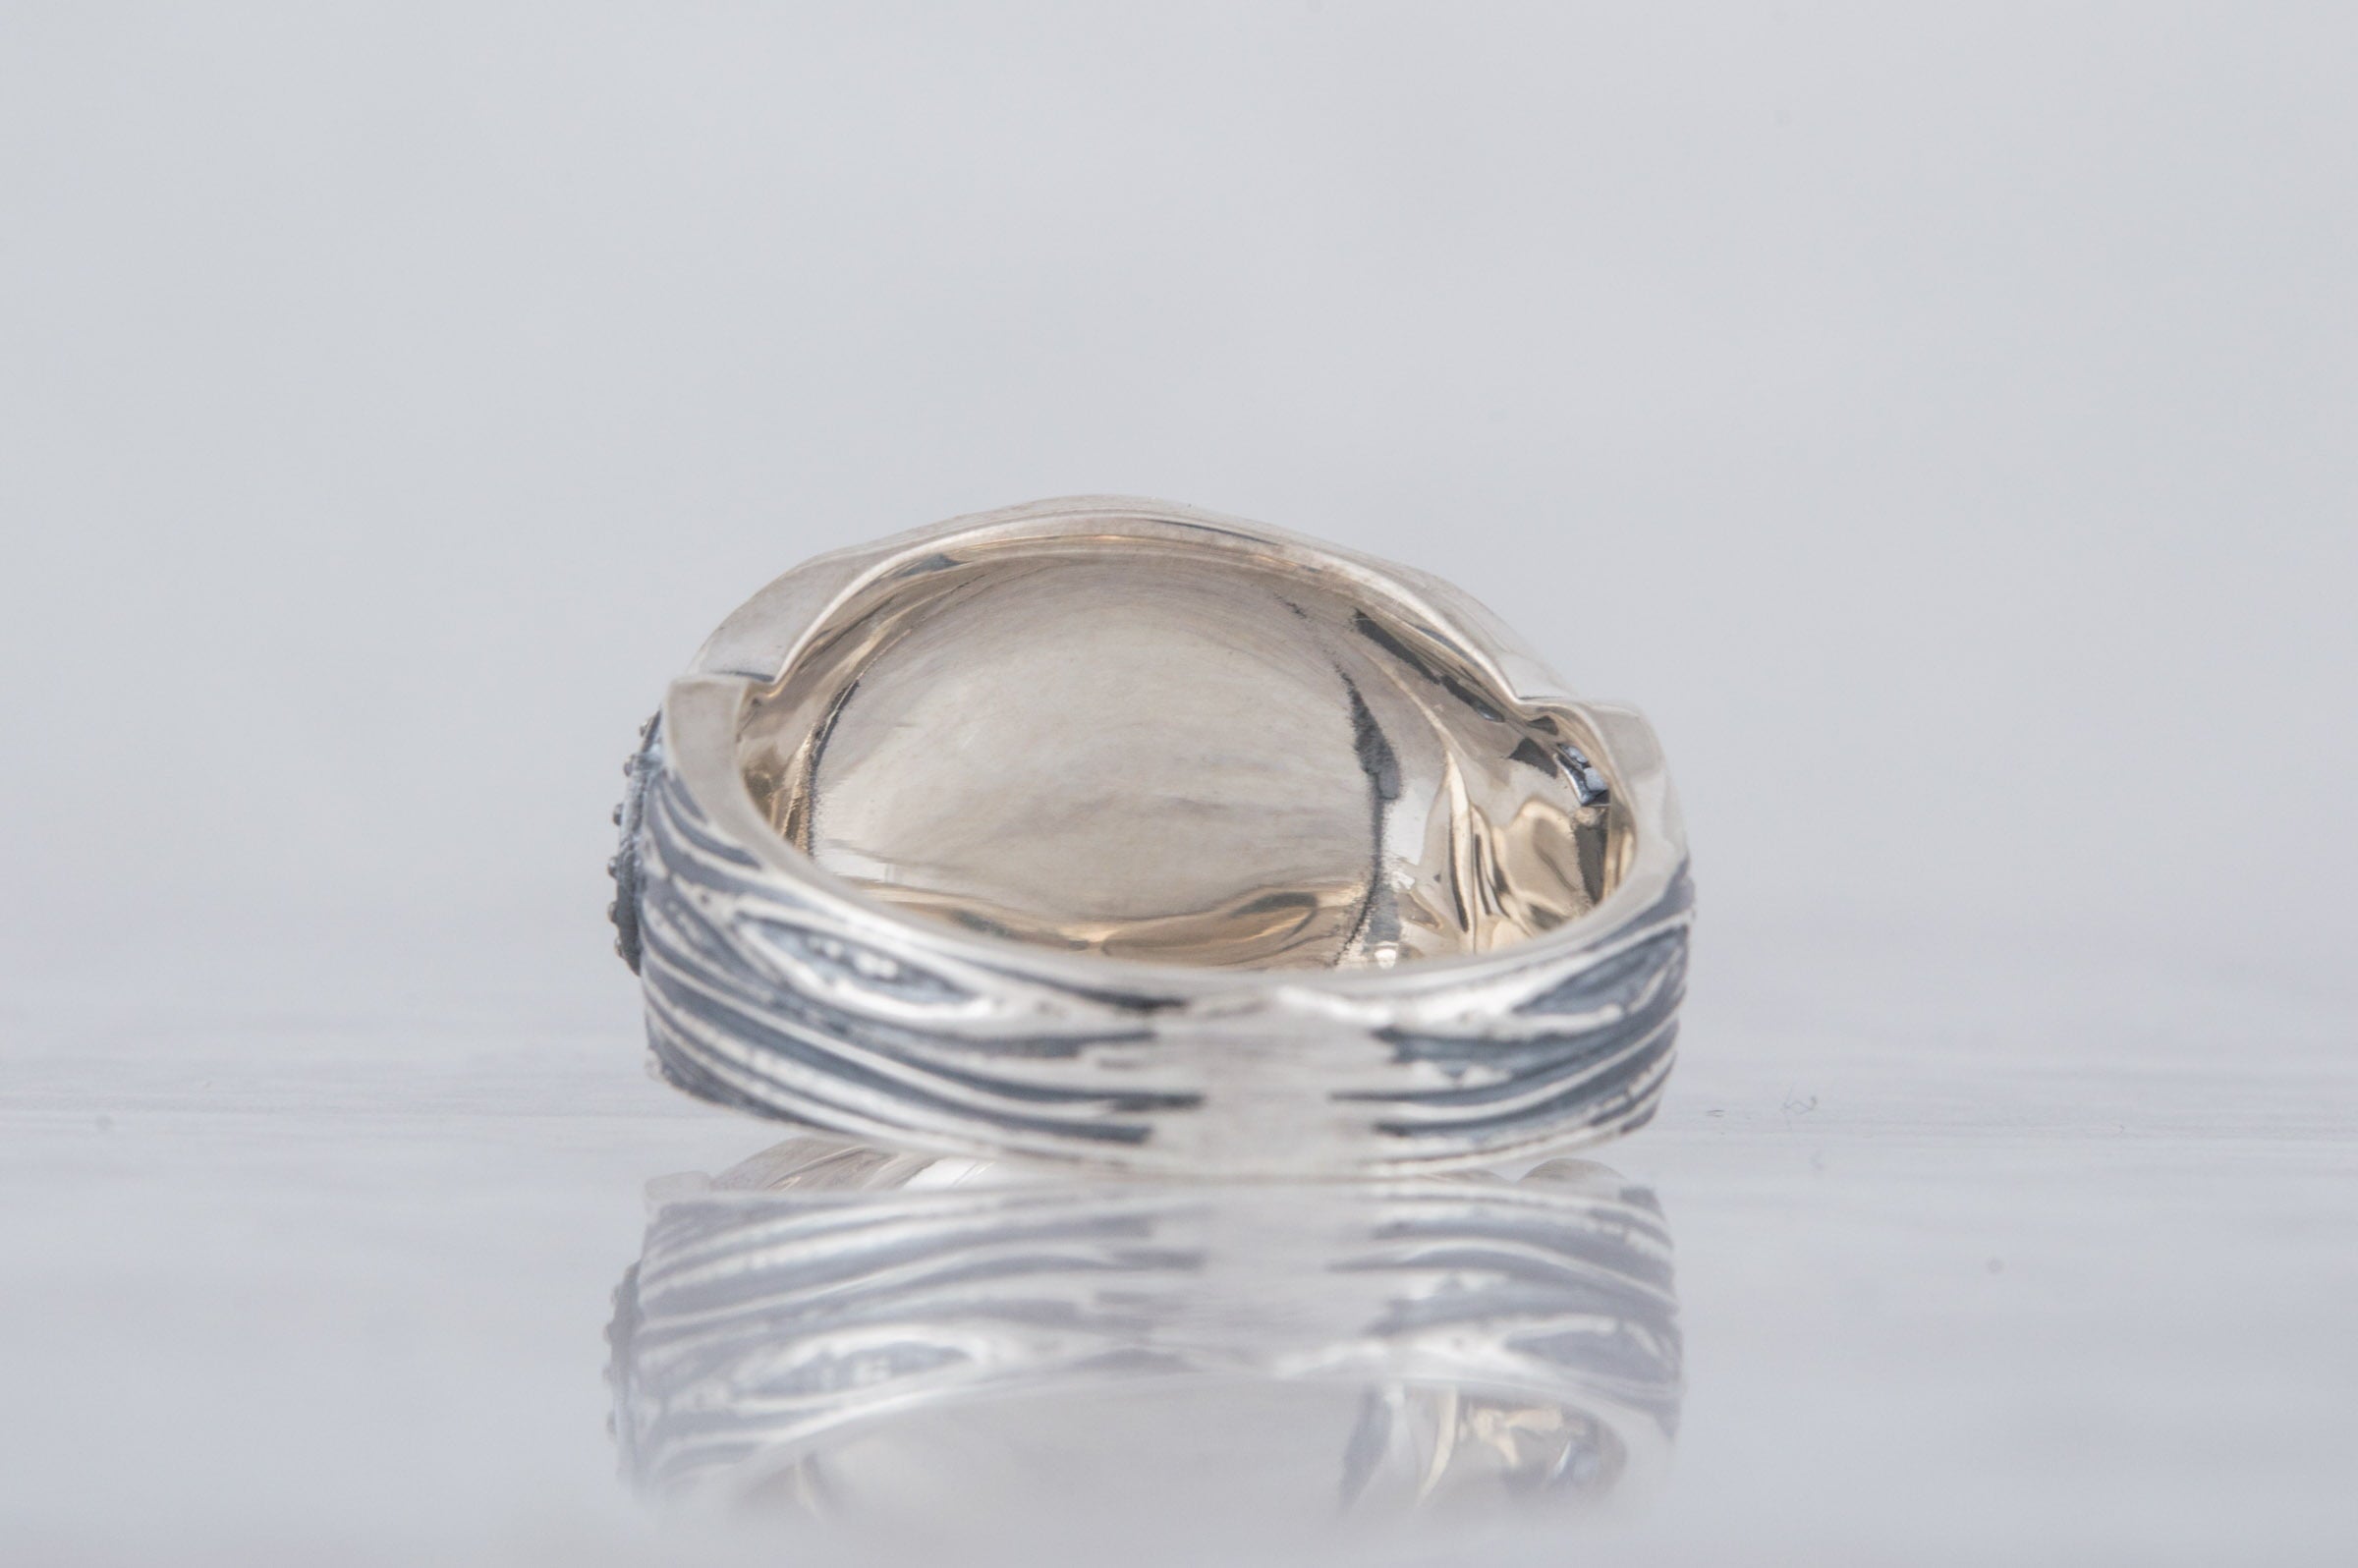 Raven Symbol Ring Sterling Silver Handmade Viking Jewelry - vikingworkshop